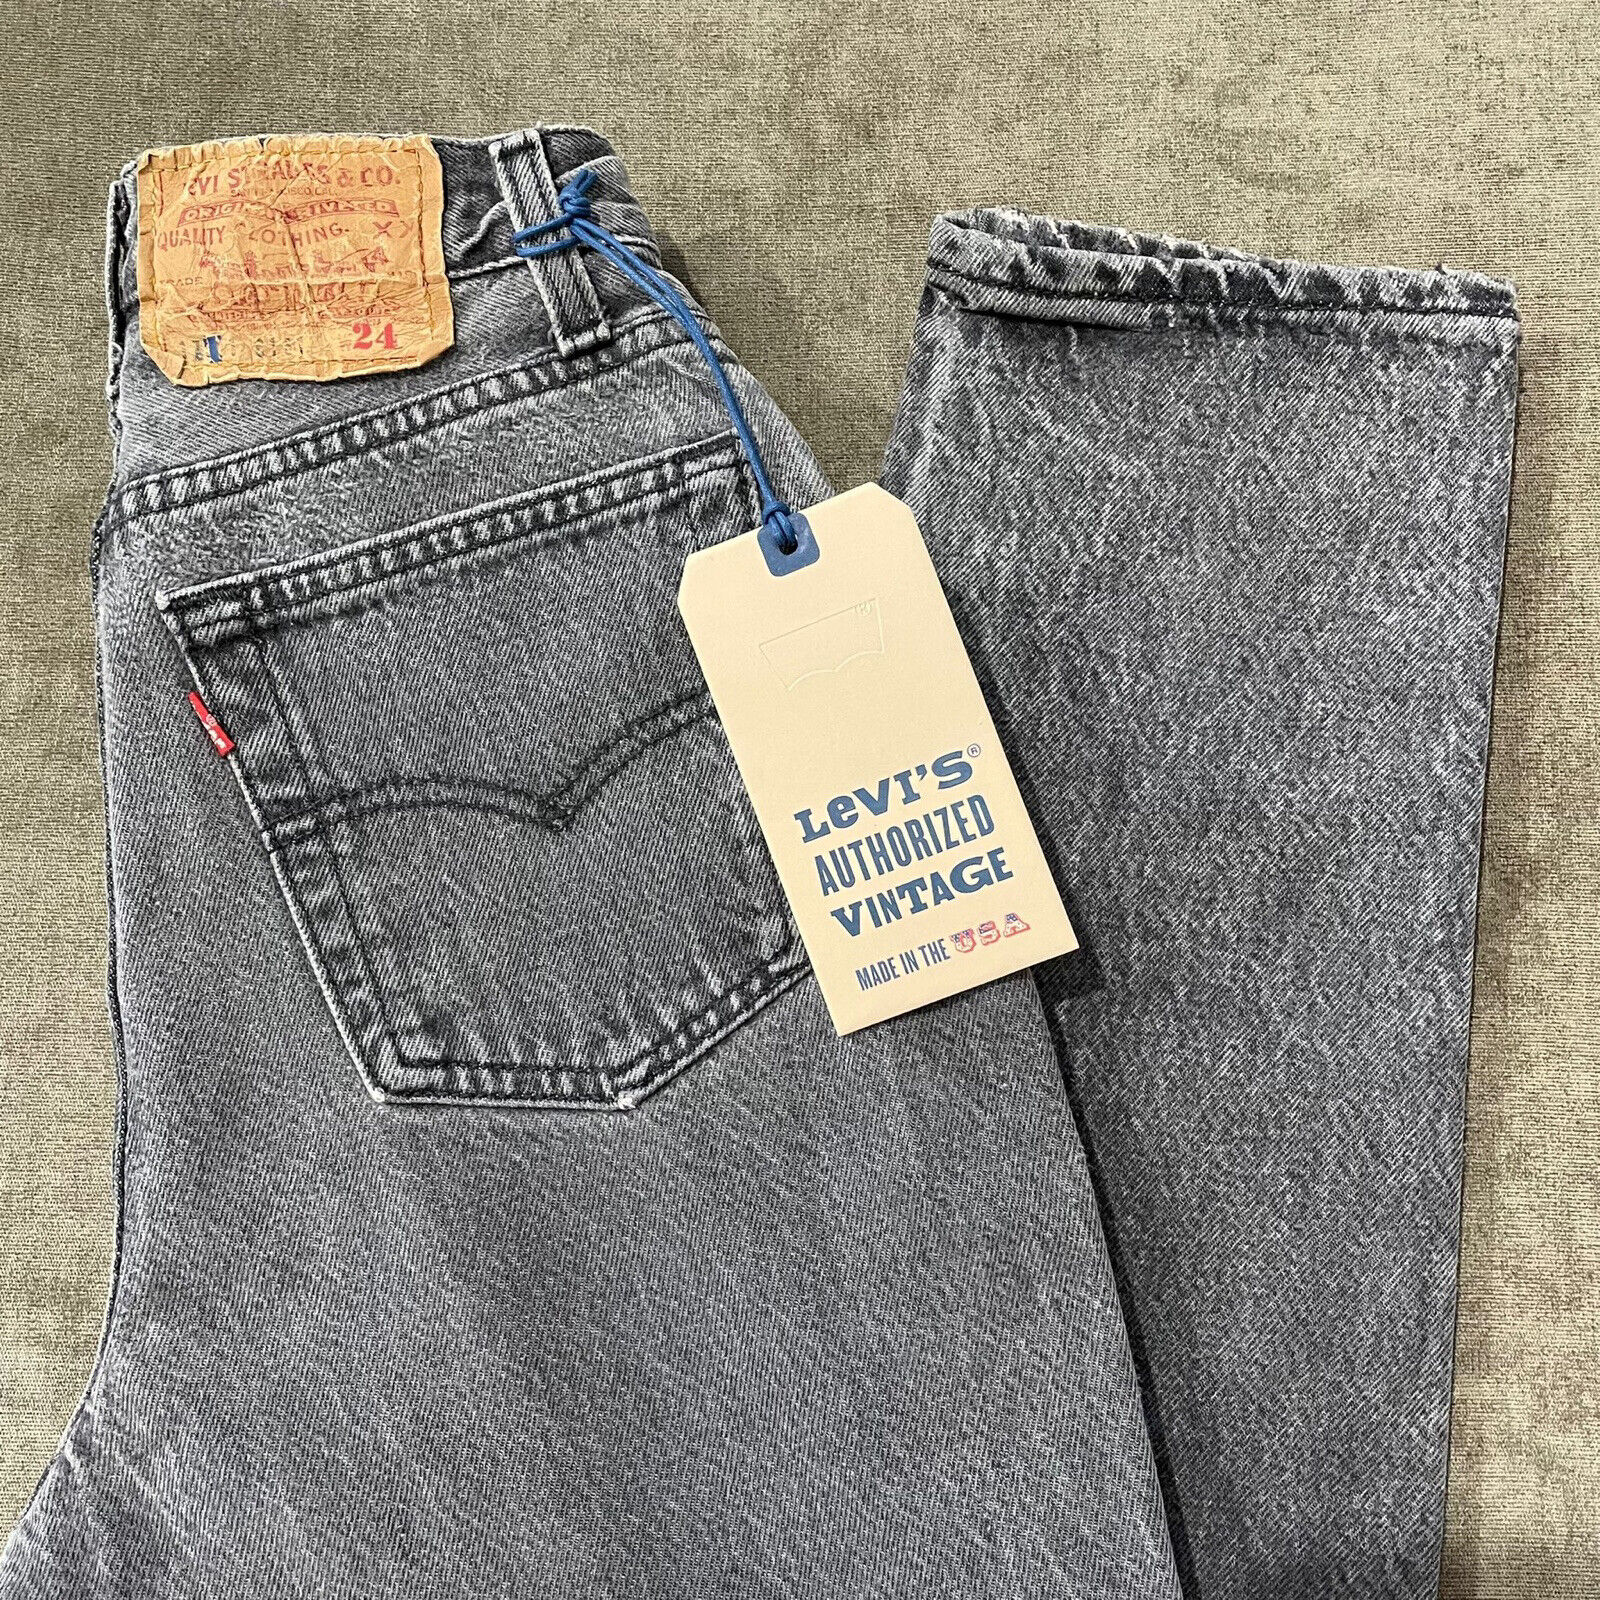 Levi's Authorized Vintage 501 Made In USA Distressed Jean's Original 24”  Waist | eBay